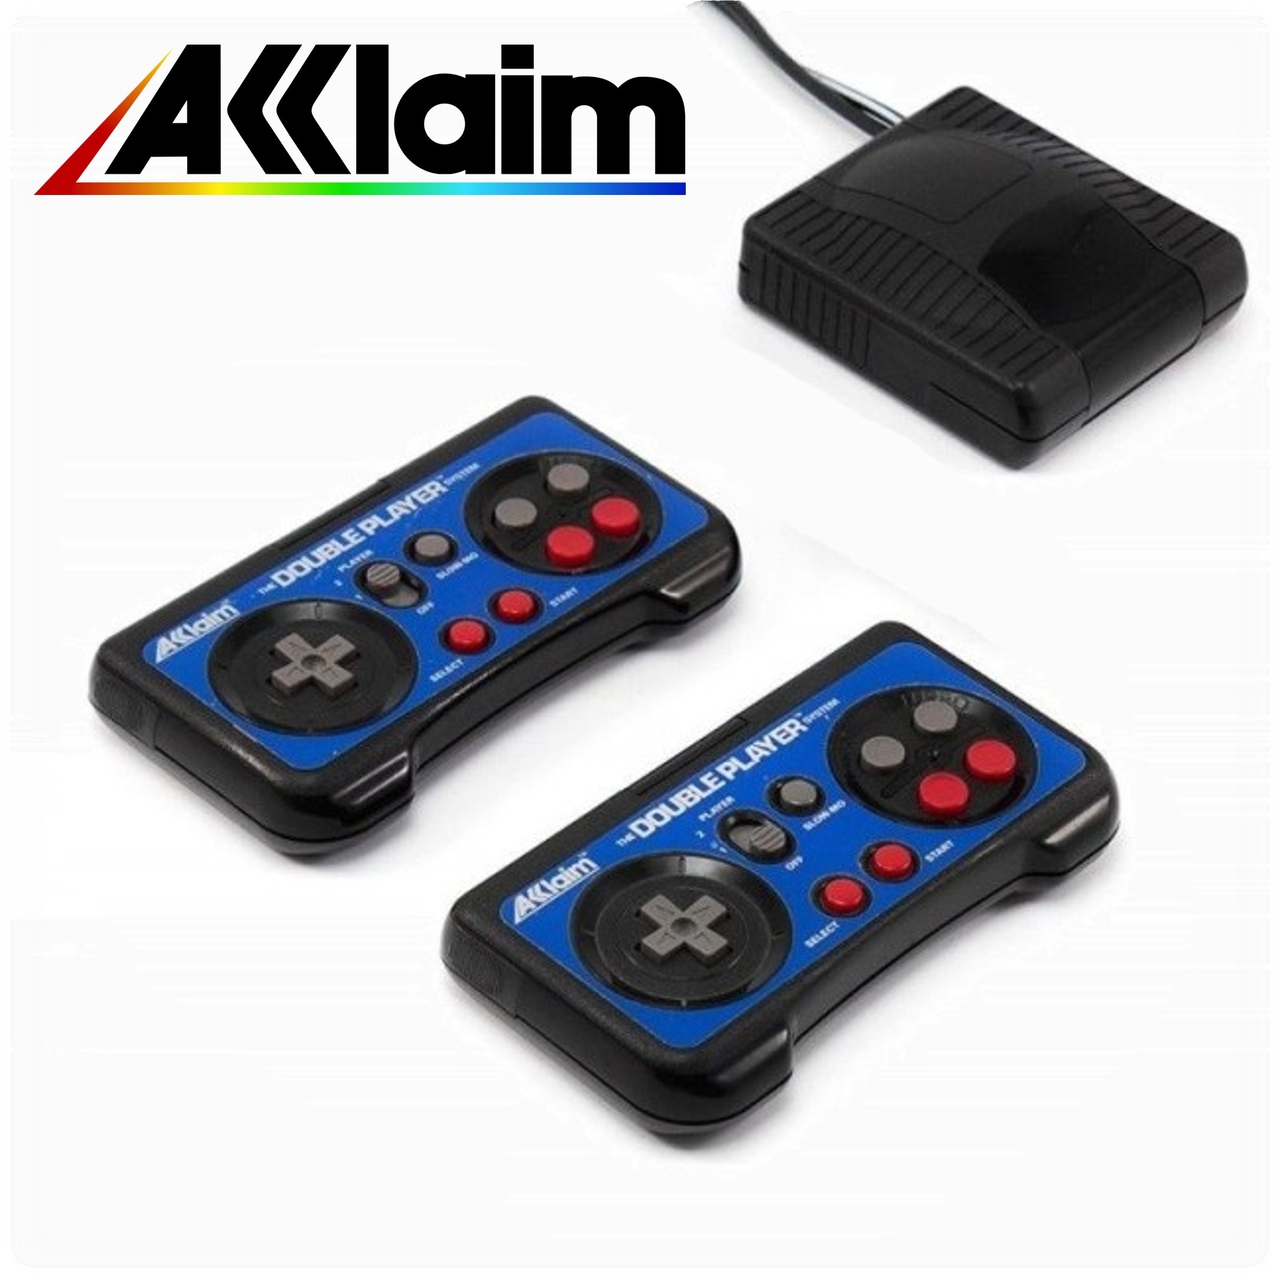 Akklaim Wireless Double Player System Kopen | Nintendo NES Hardware